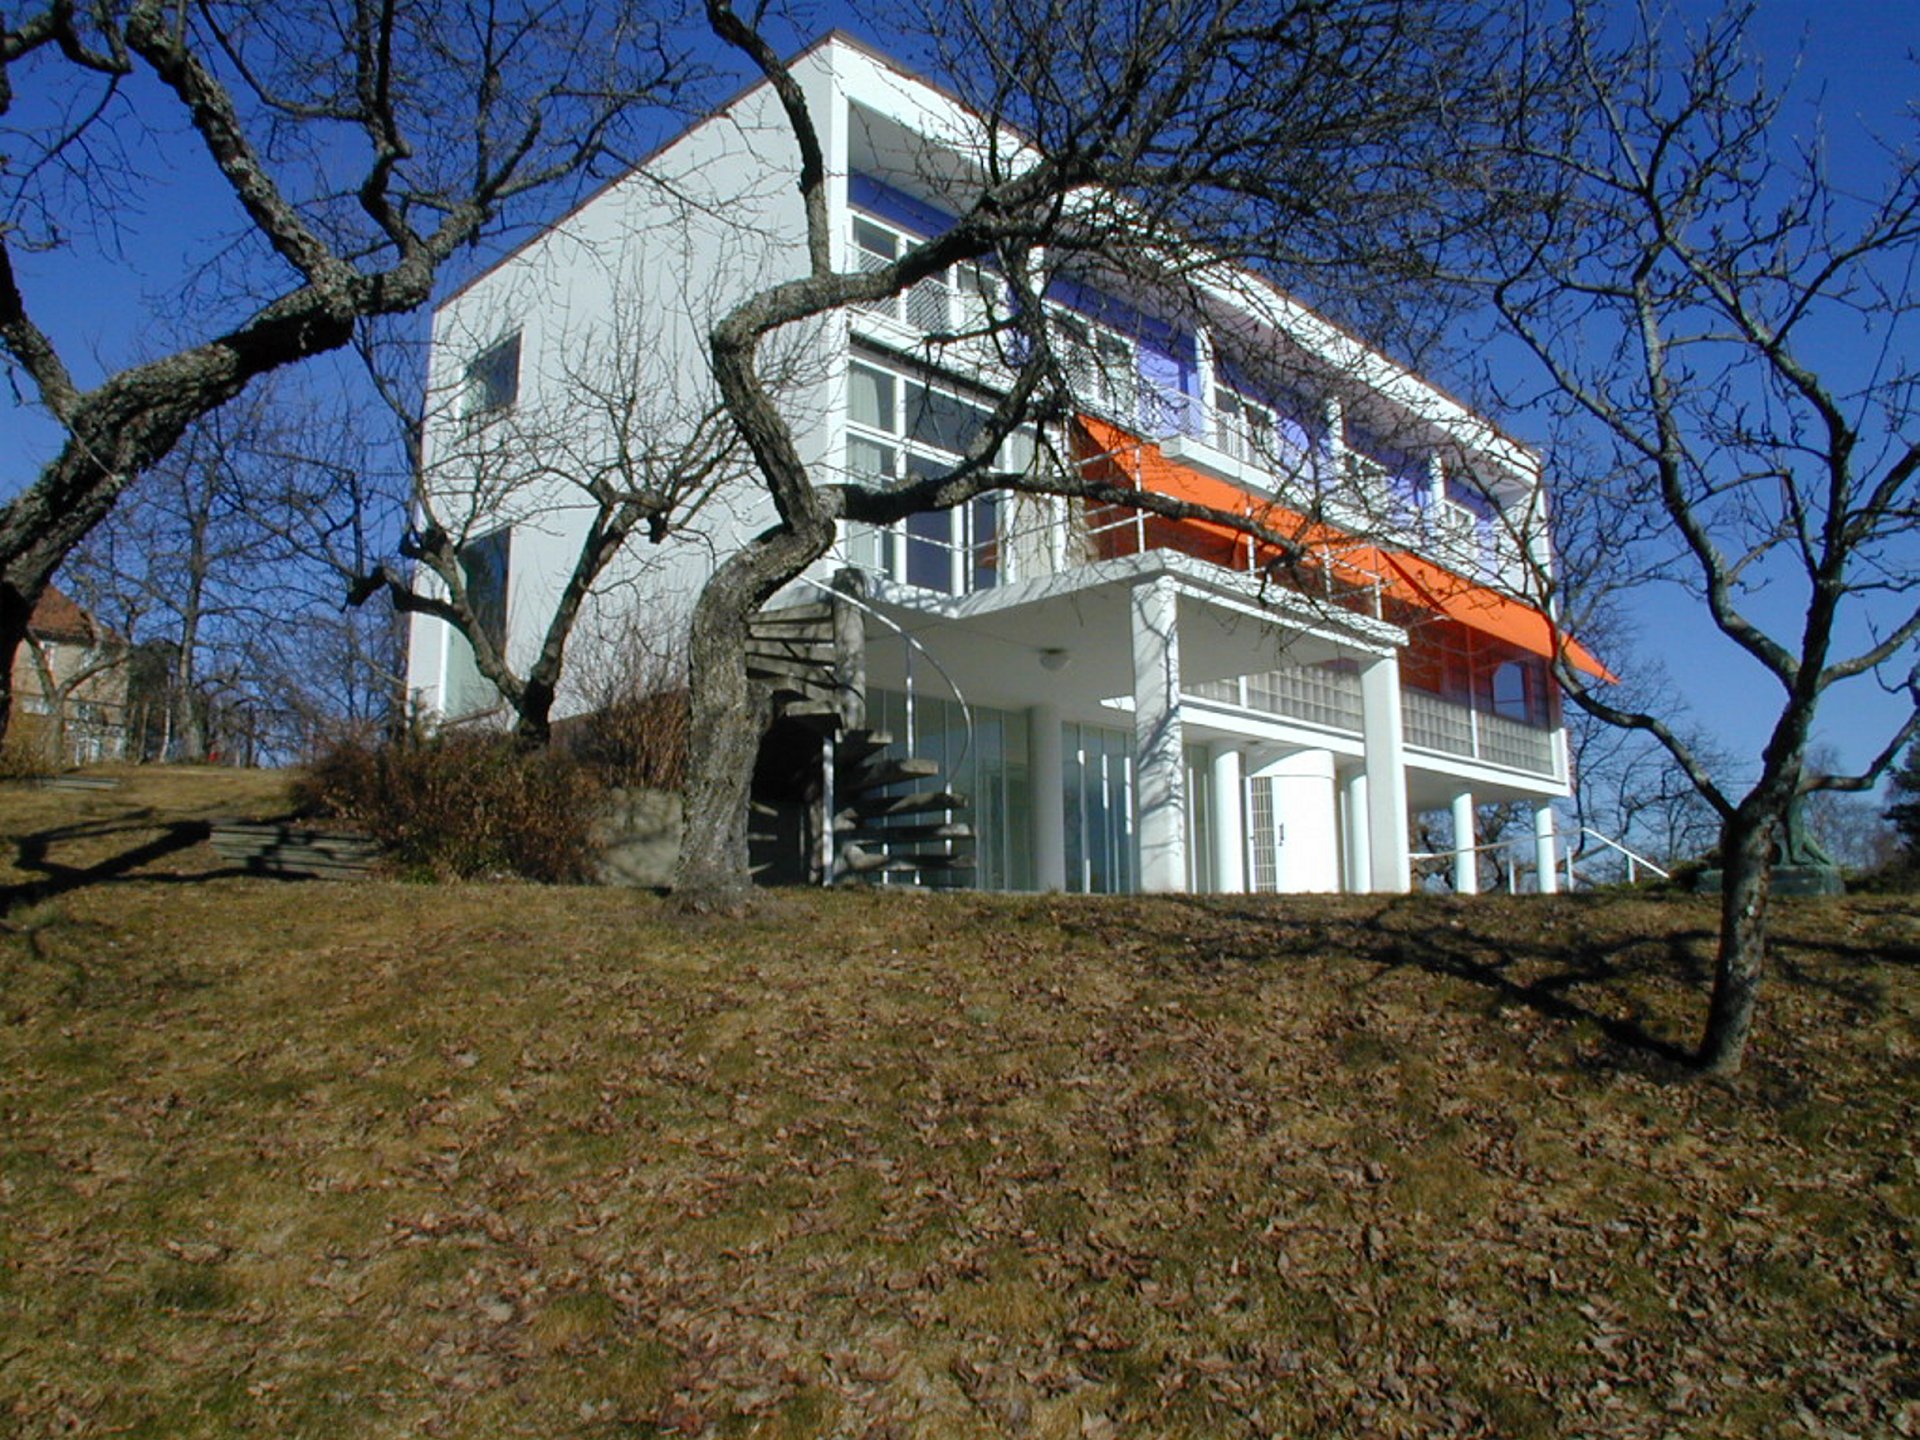 Villa Stenersen (Tuengen allé 10 C, Oslo)